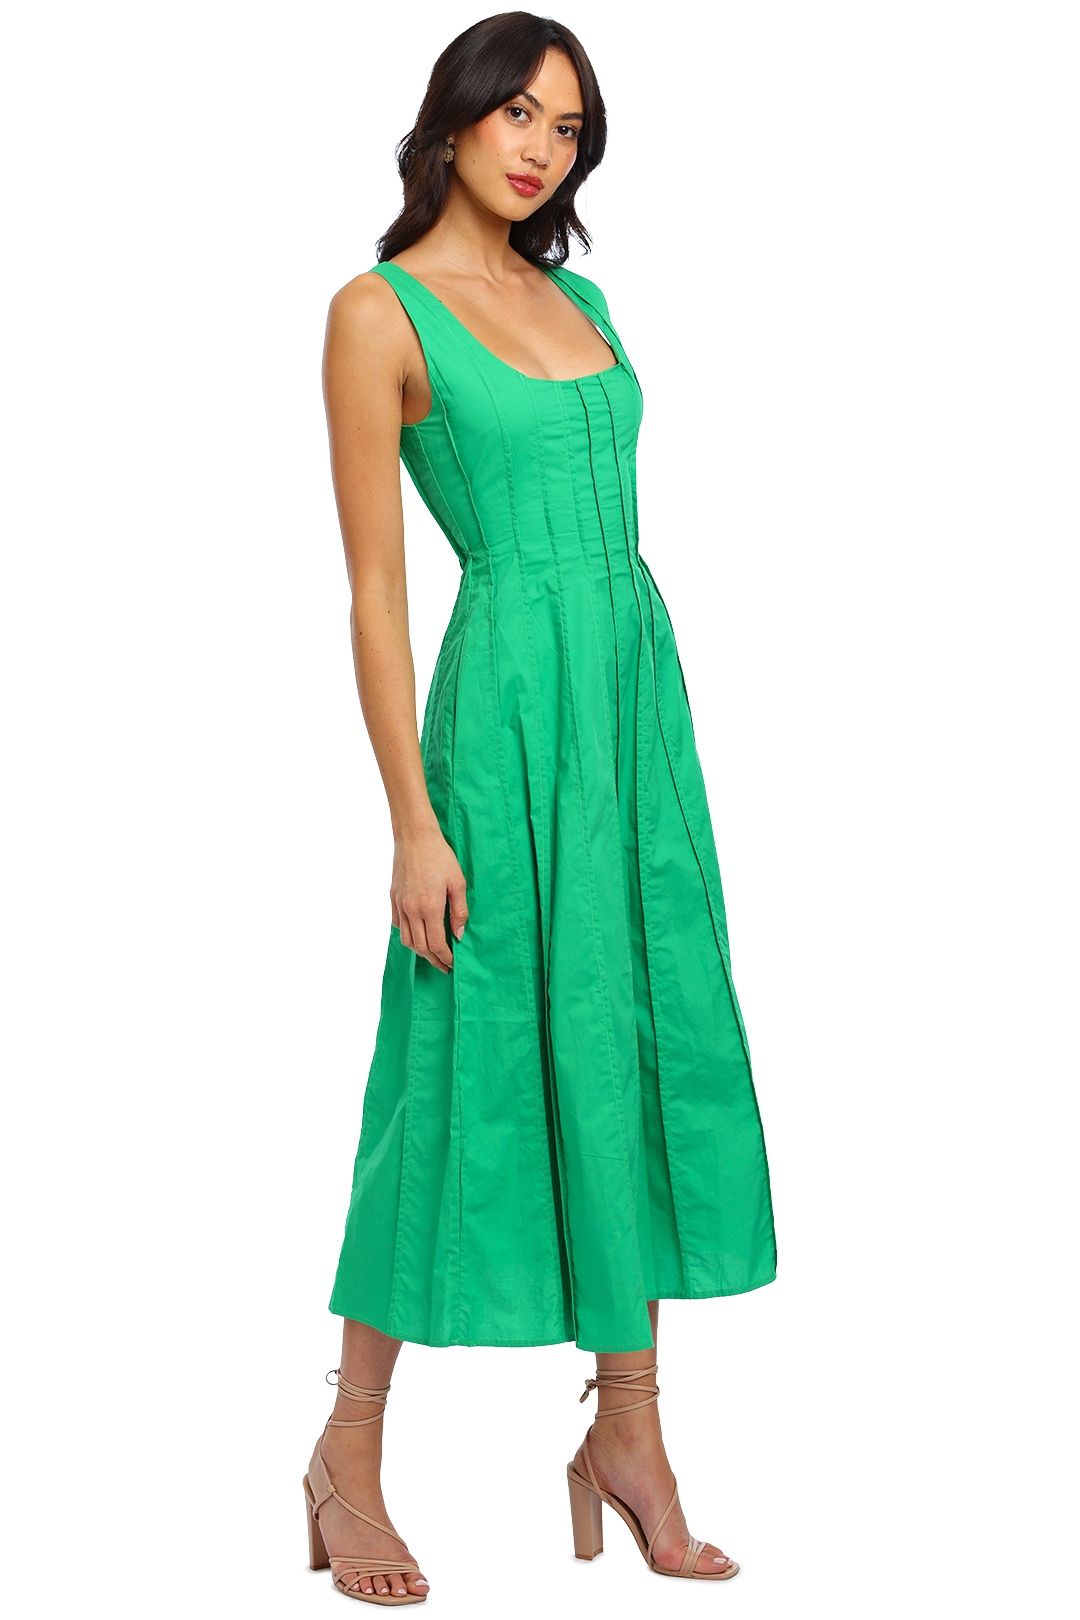 Nicholas Talullah Dress Emerald green